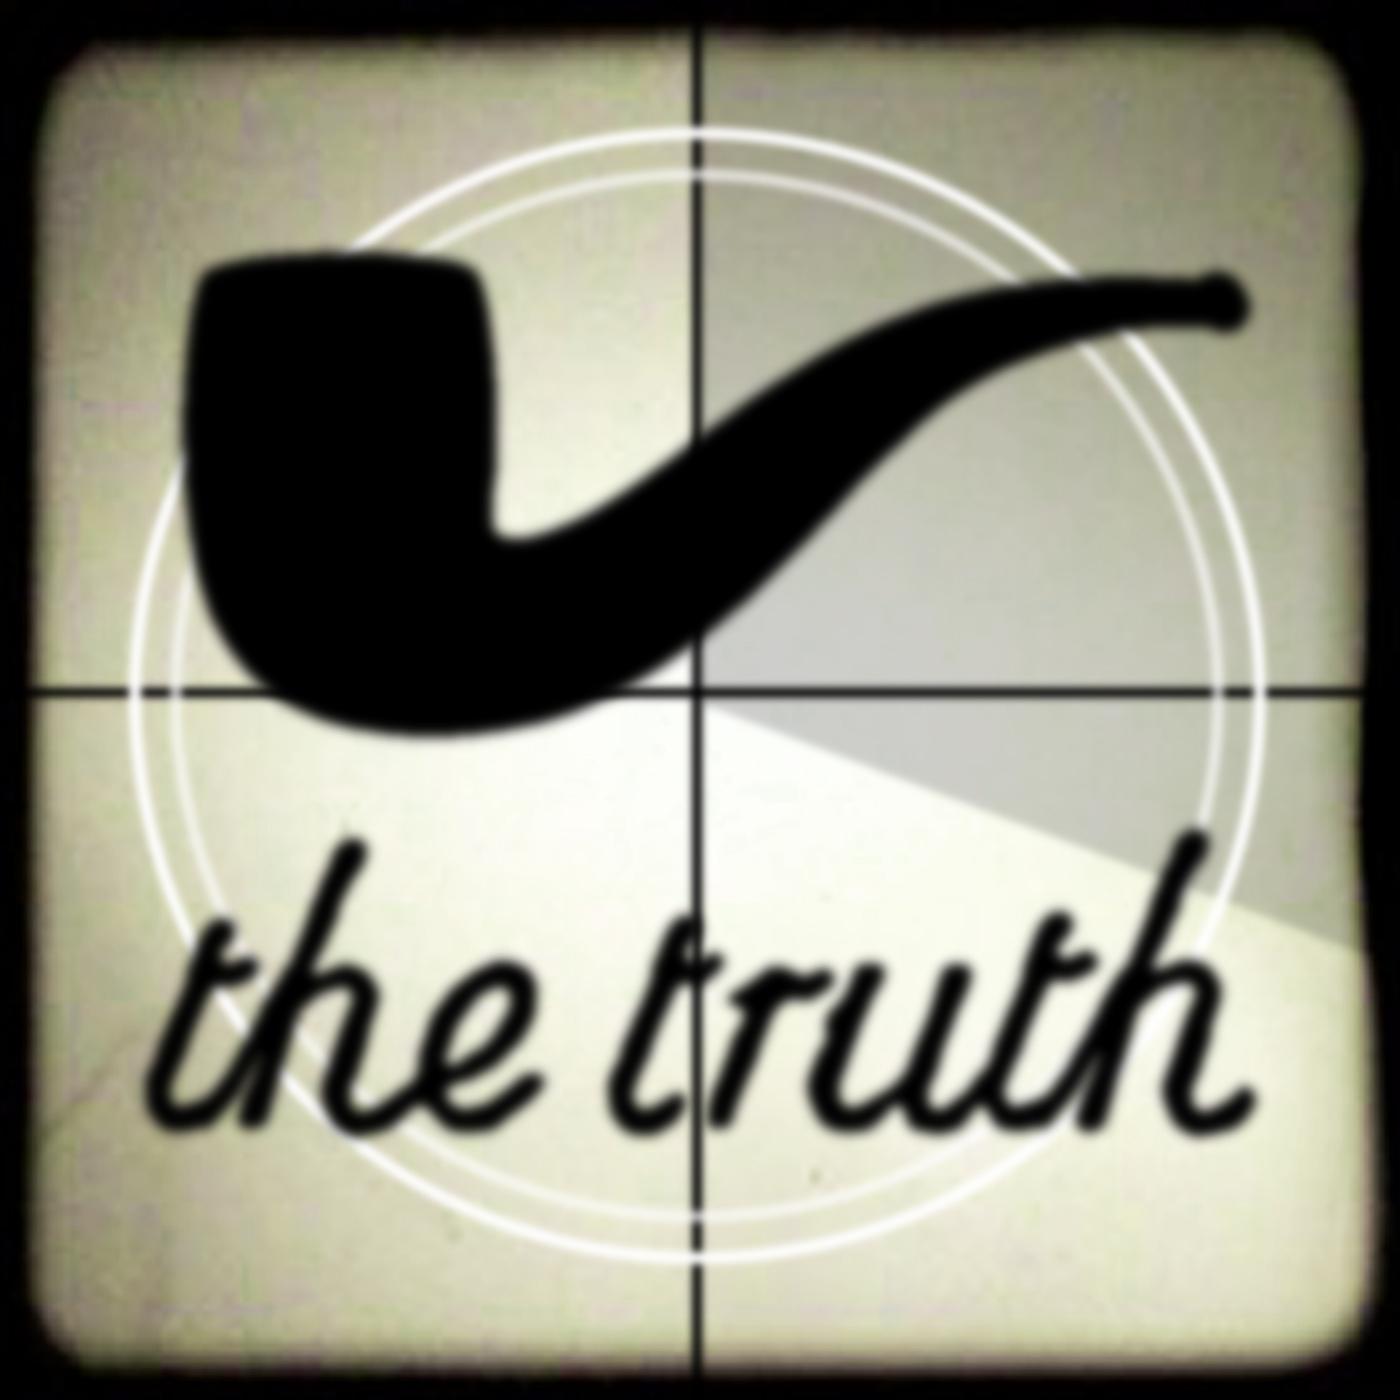 The Truth logo